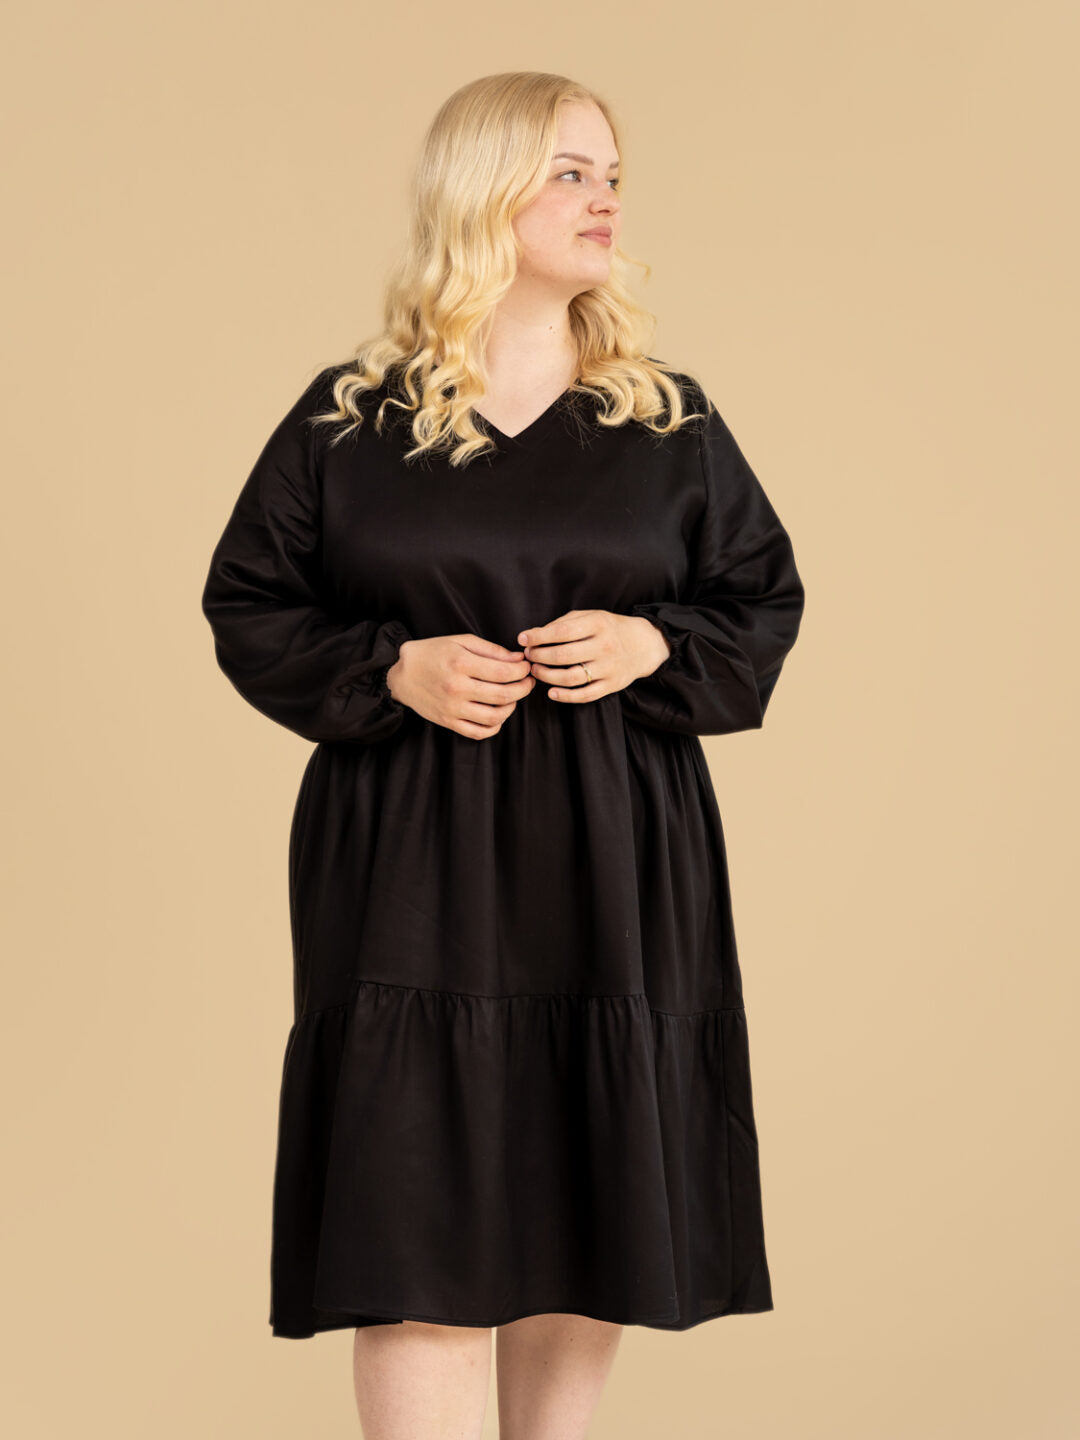 Black fabric dress